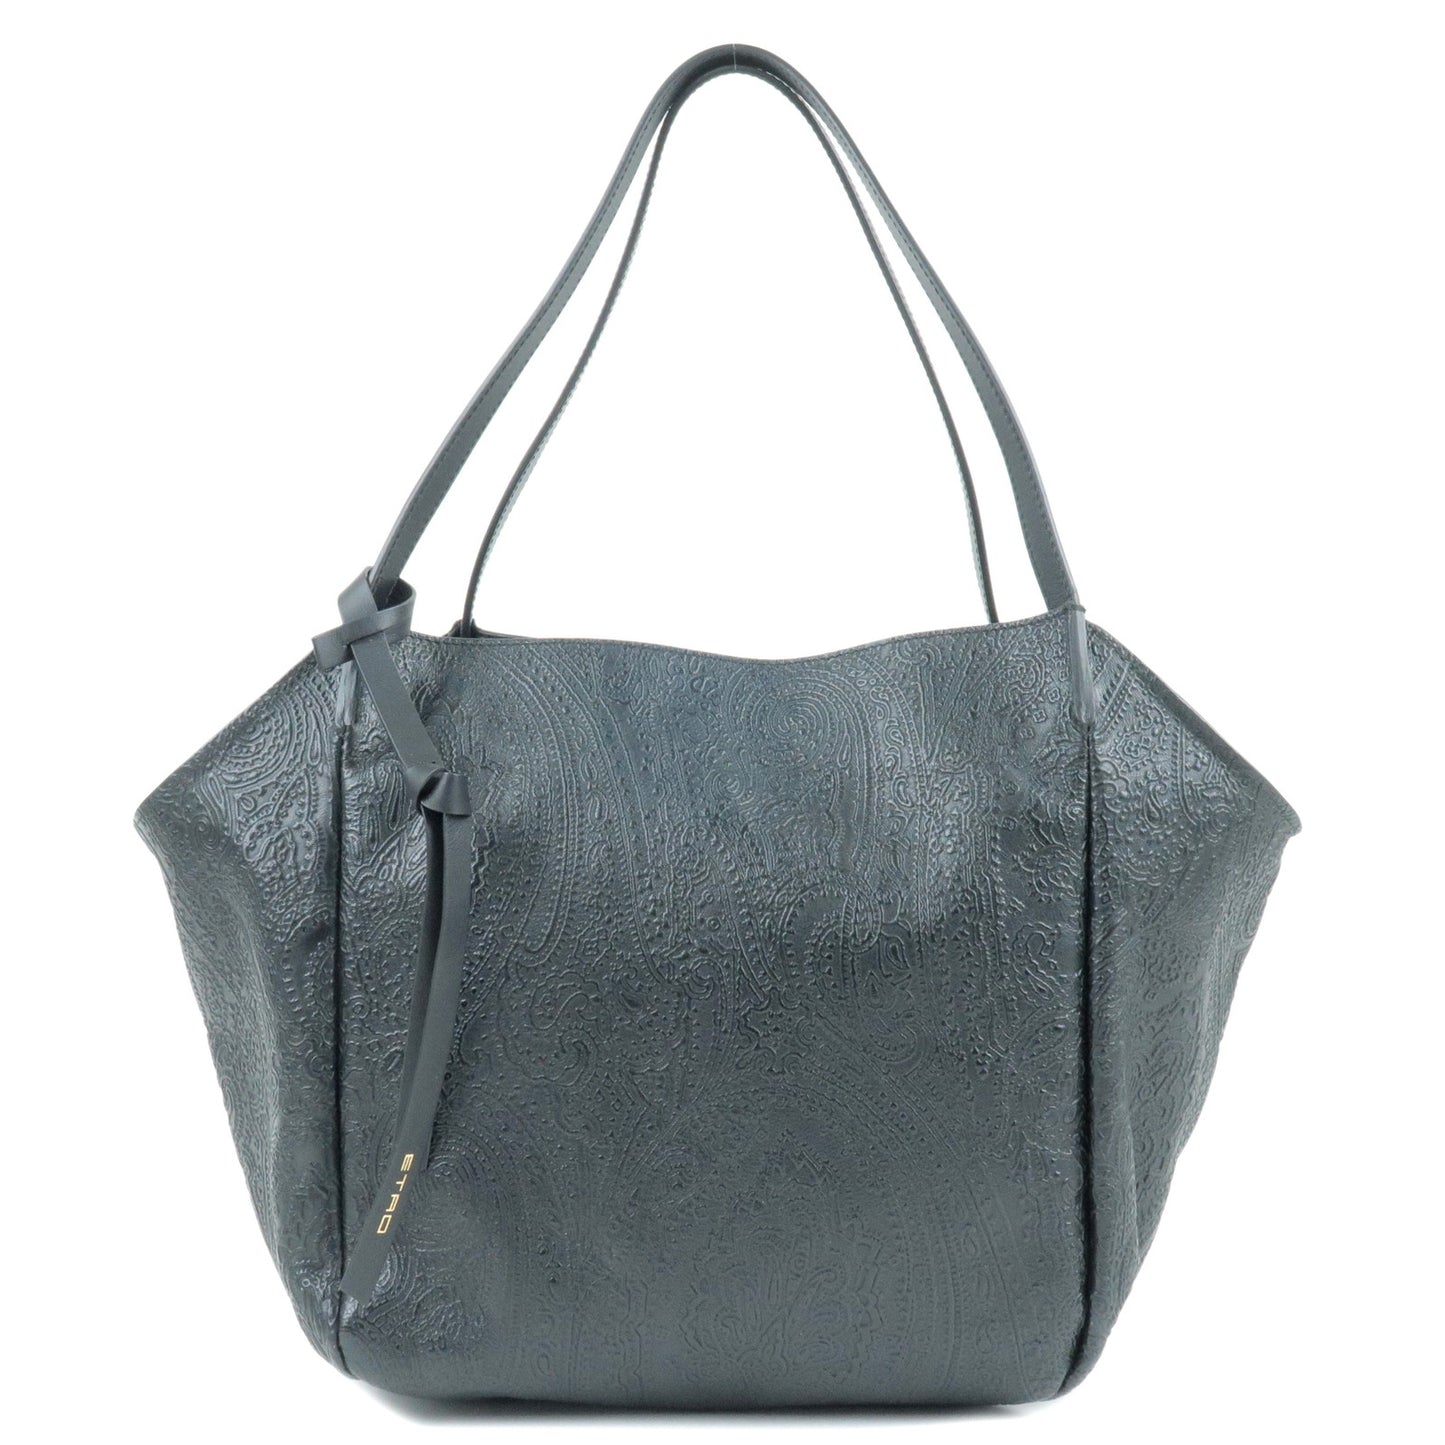 ETRO-Leather-Paisley-Embossed-Tote-Bag-Shoulder-Bag-Black